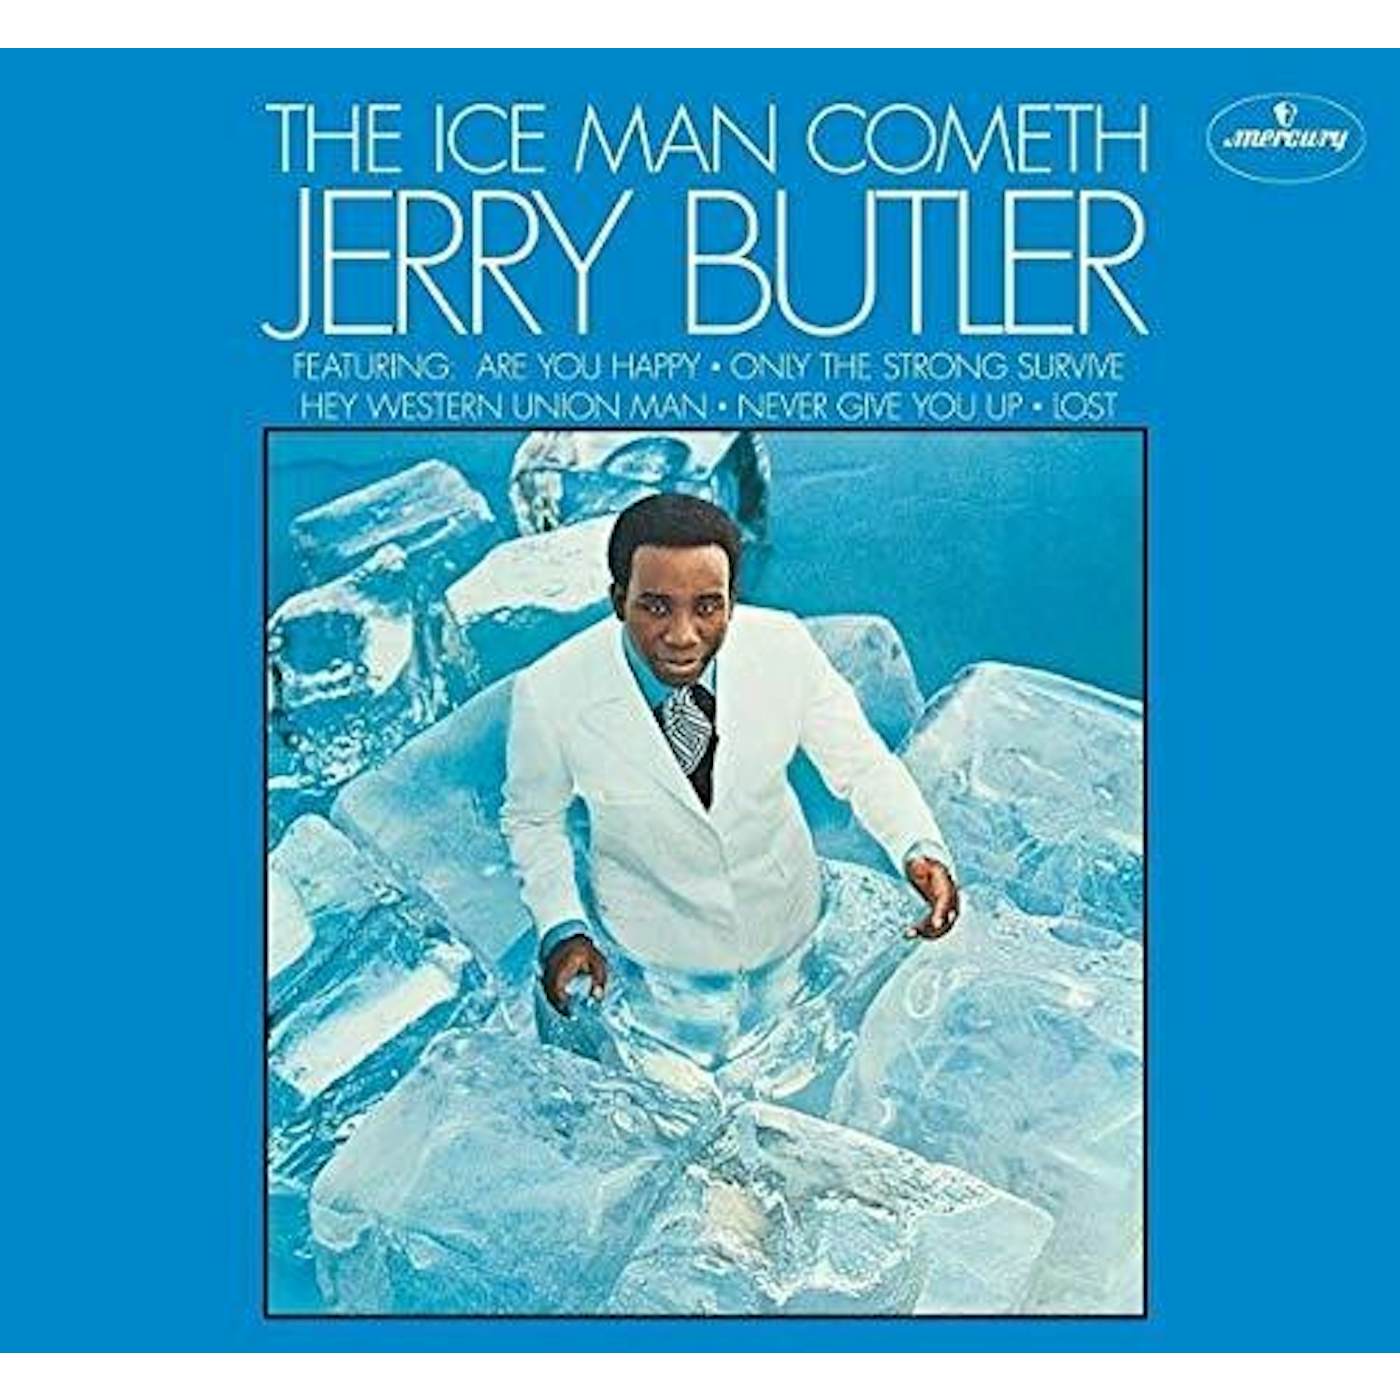 Jerry Butler ICEMAN COMETH CD